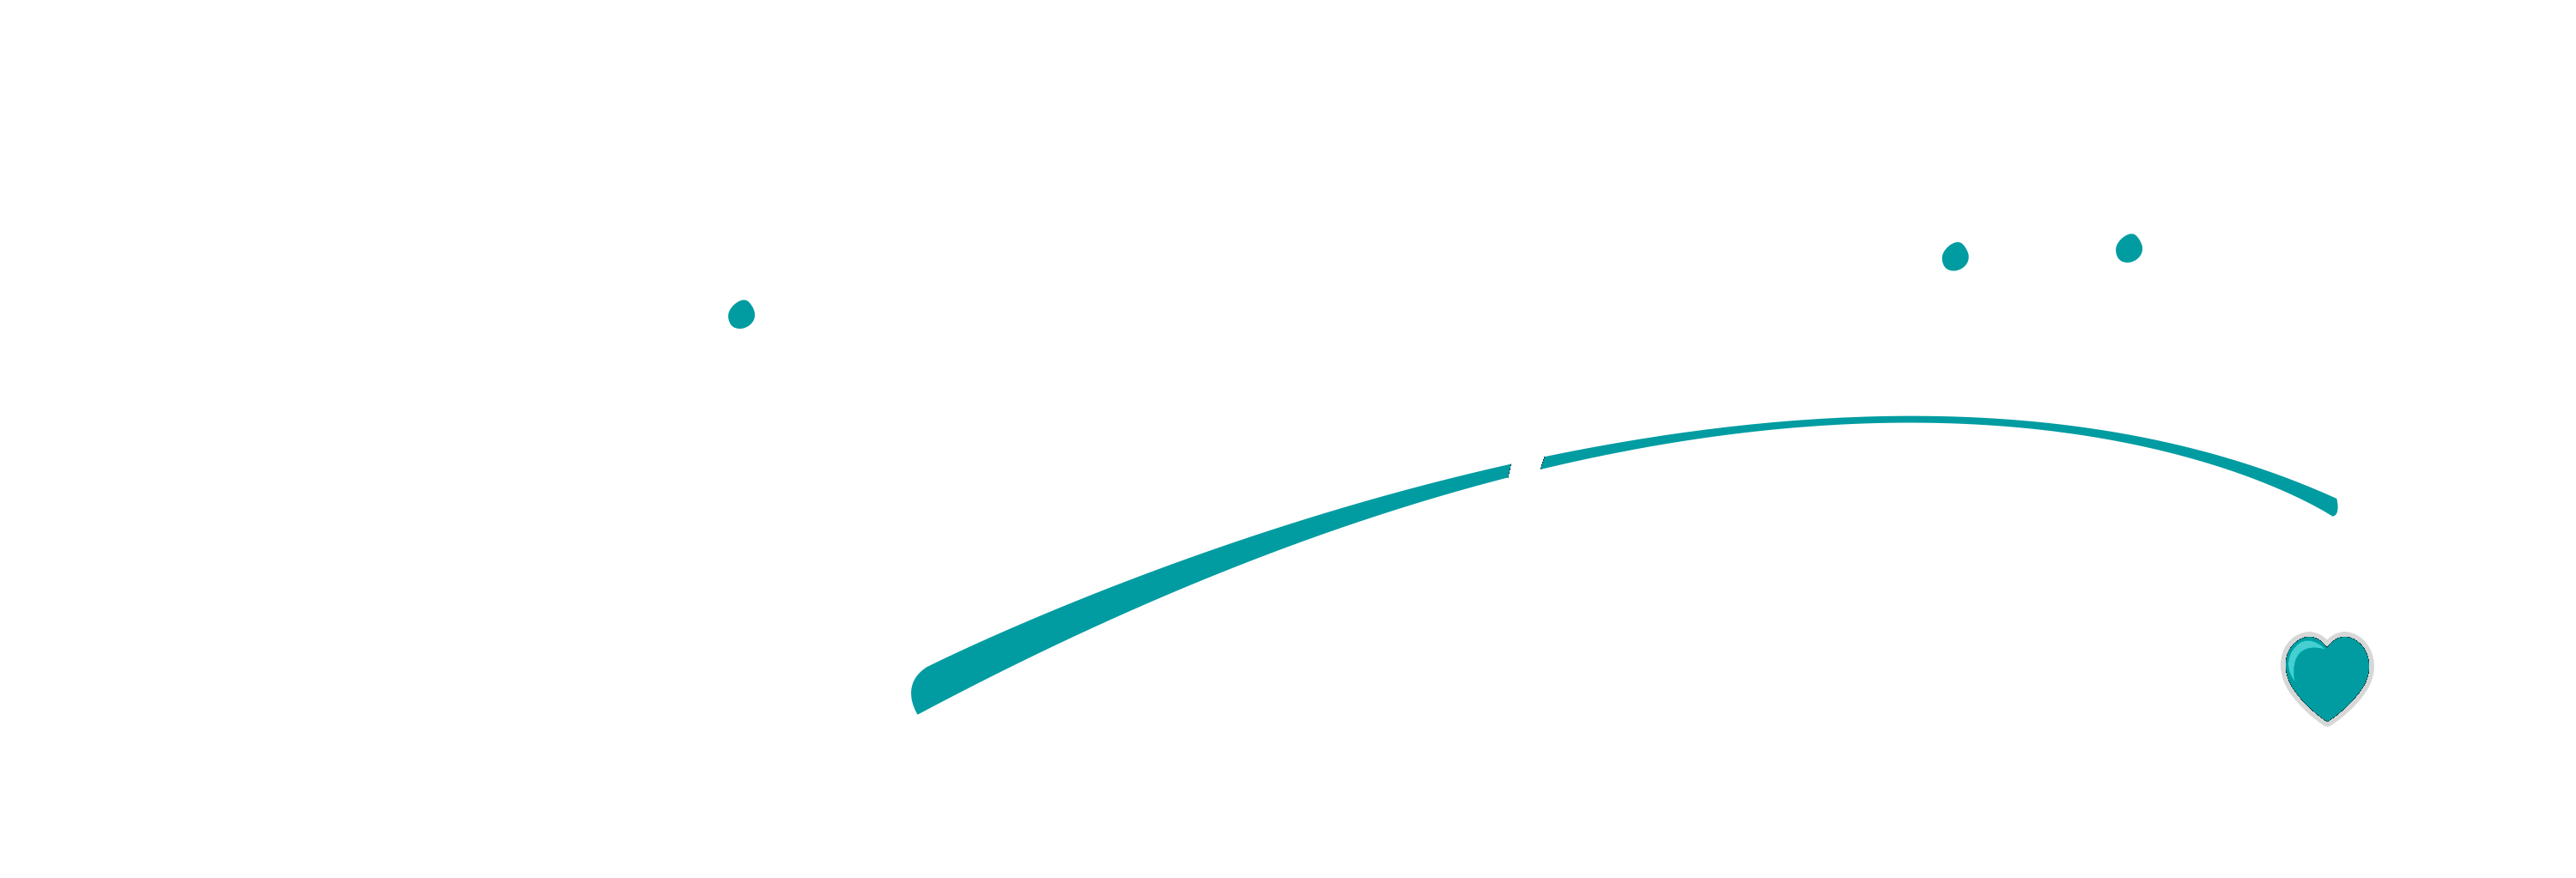 Concierge Medicine Europe